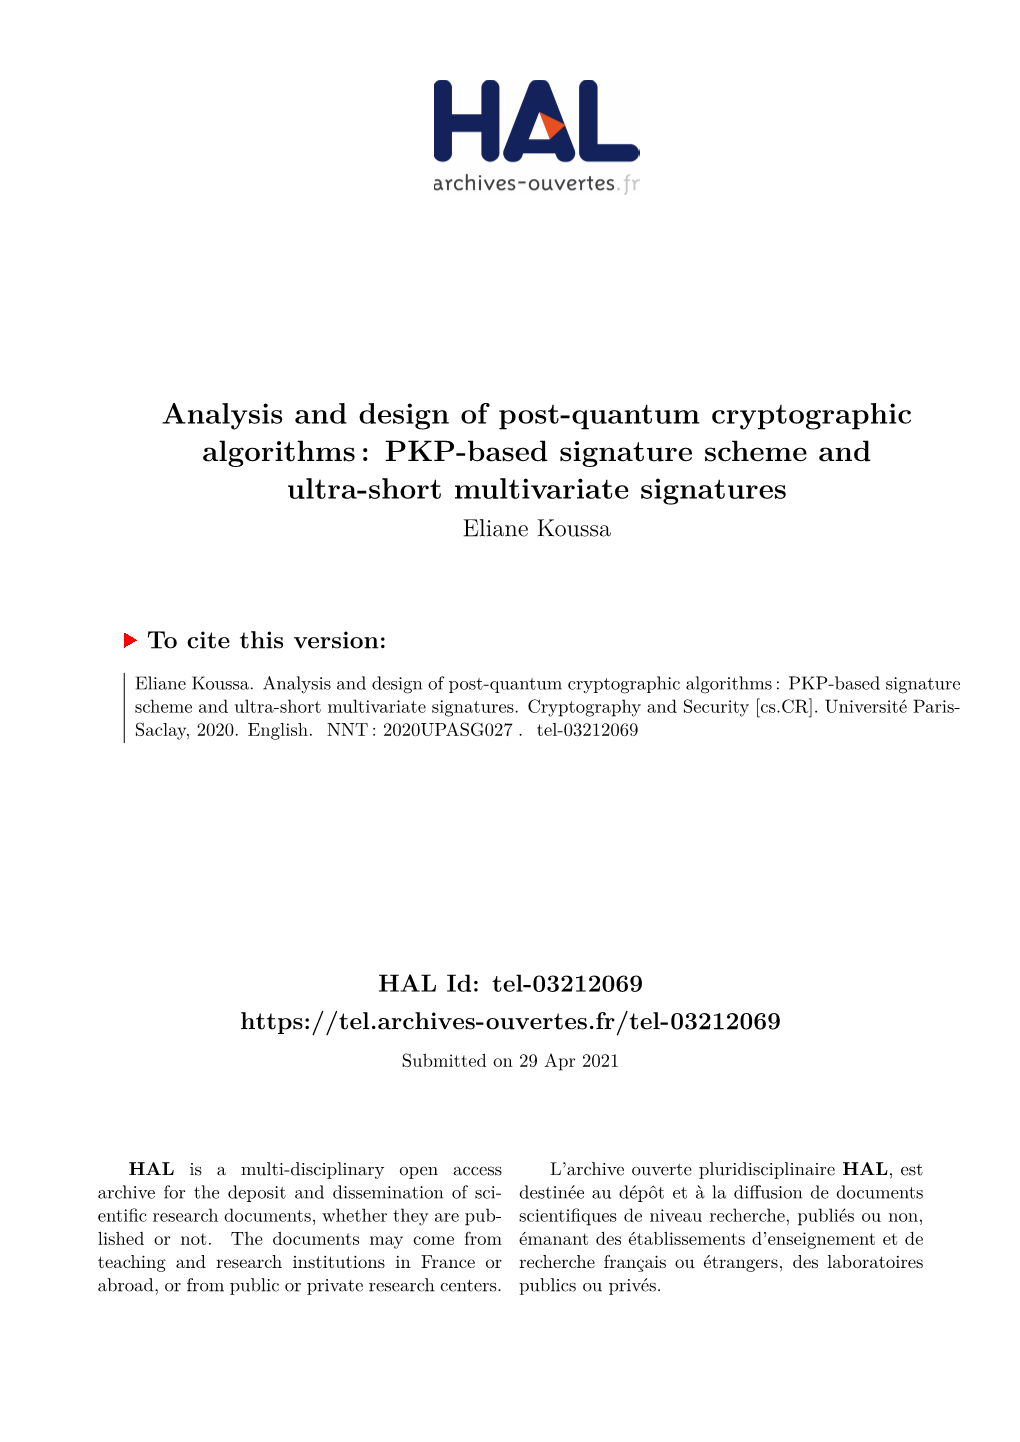 Analysis and Design of Post-Quantum Cryptographic Algorithms: PKP-Based Signature Scheme and Ultra-Short Multivariate Signatures